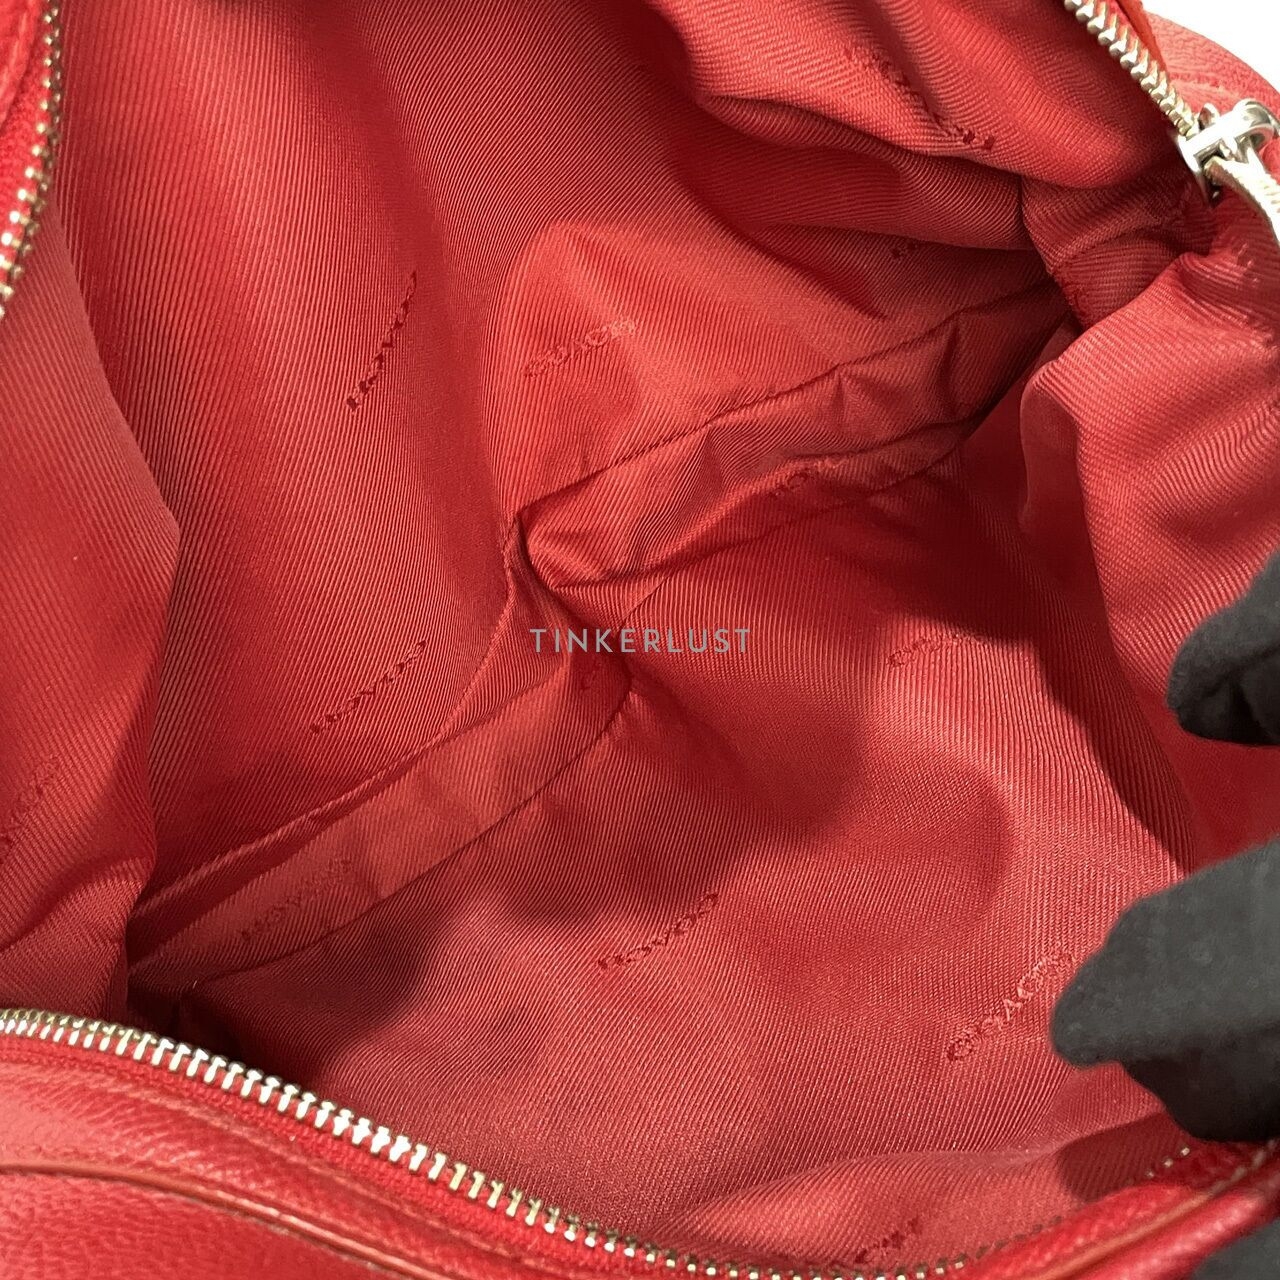 Coach Turnlock Edie Red Leather SHW Shoulder Bag